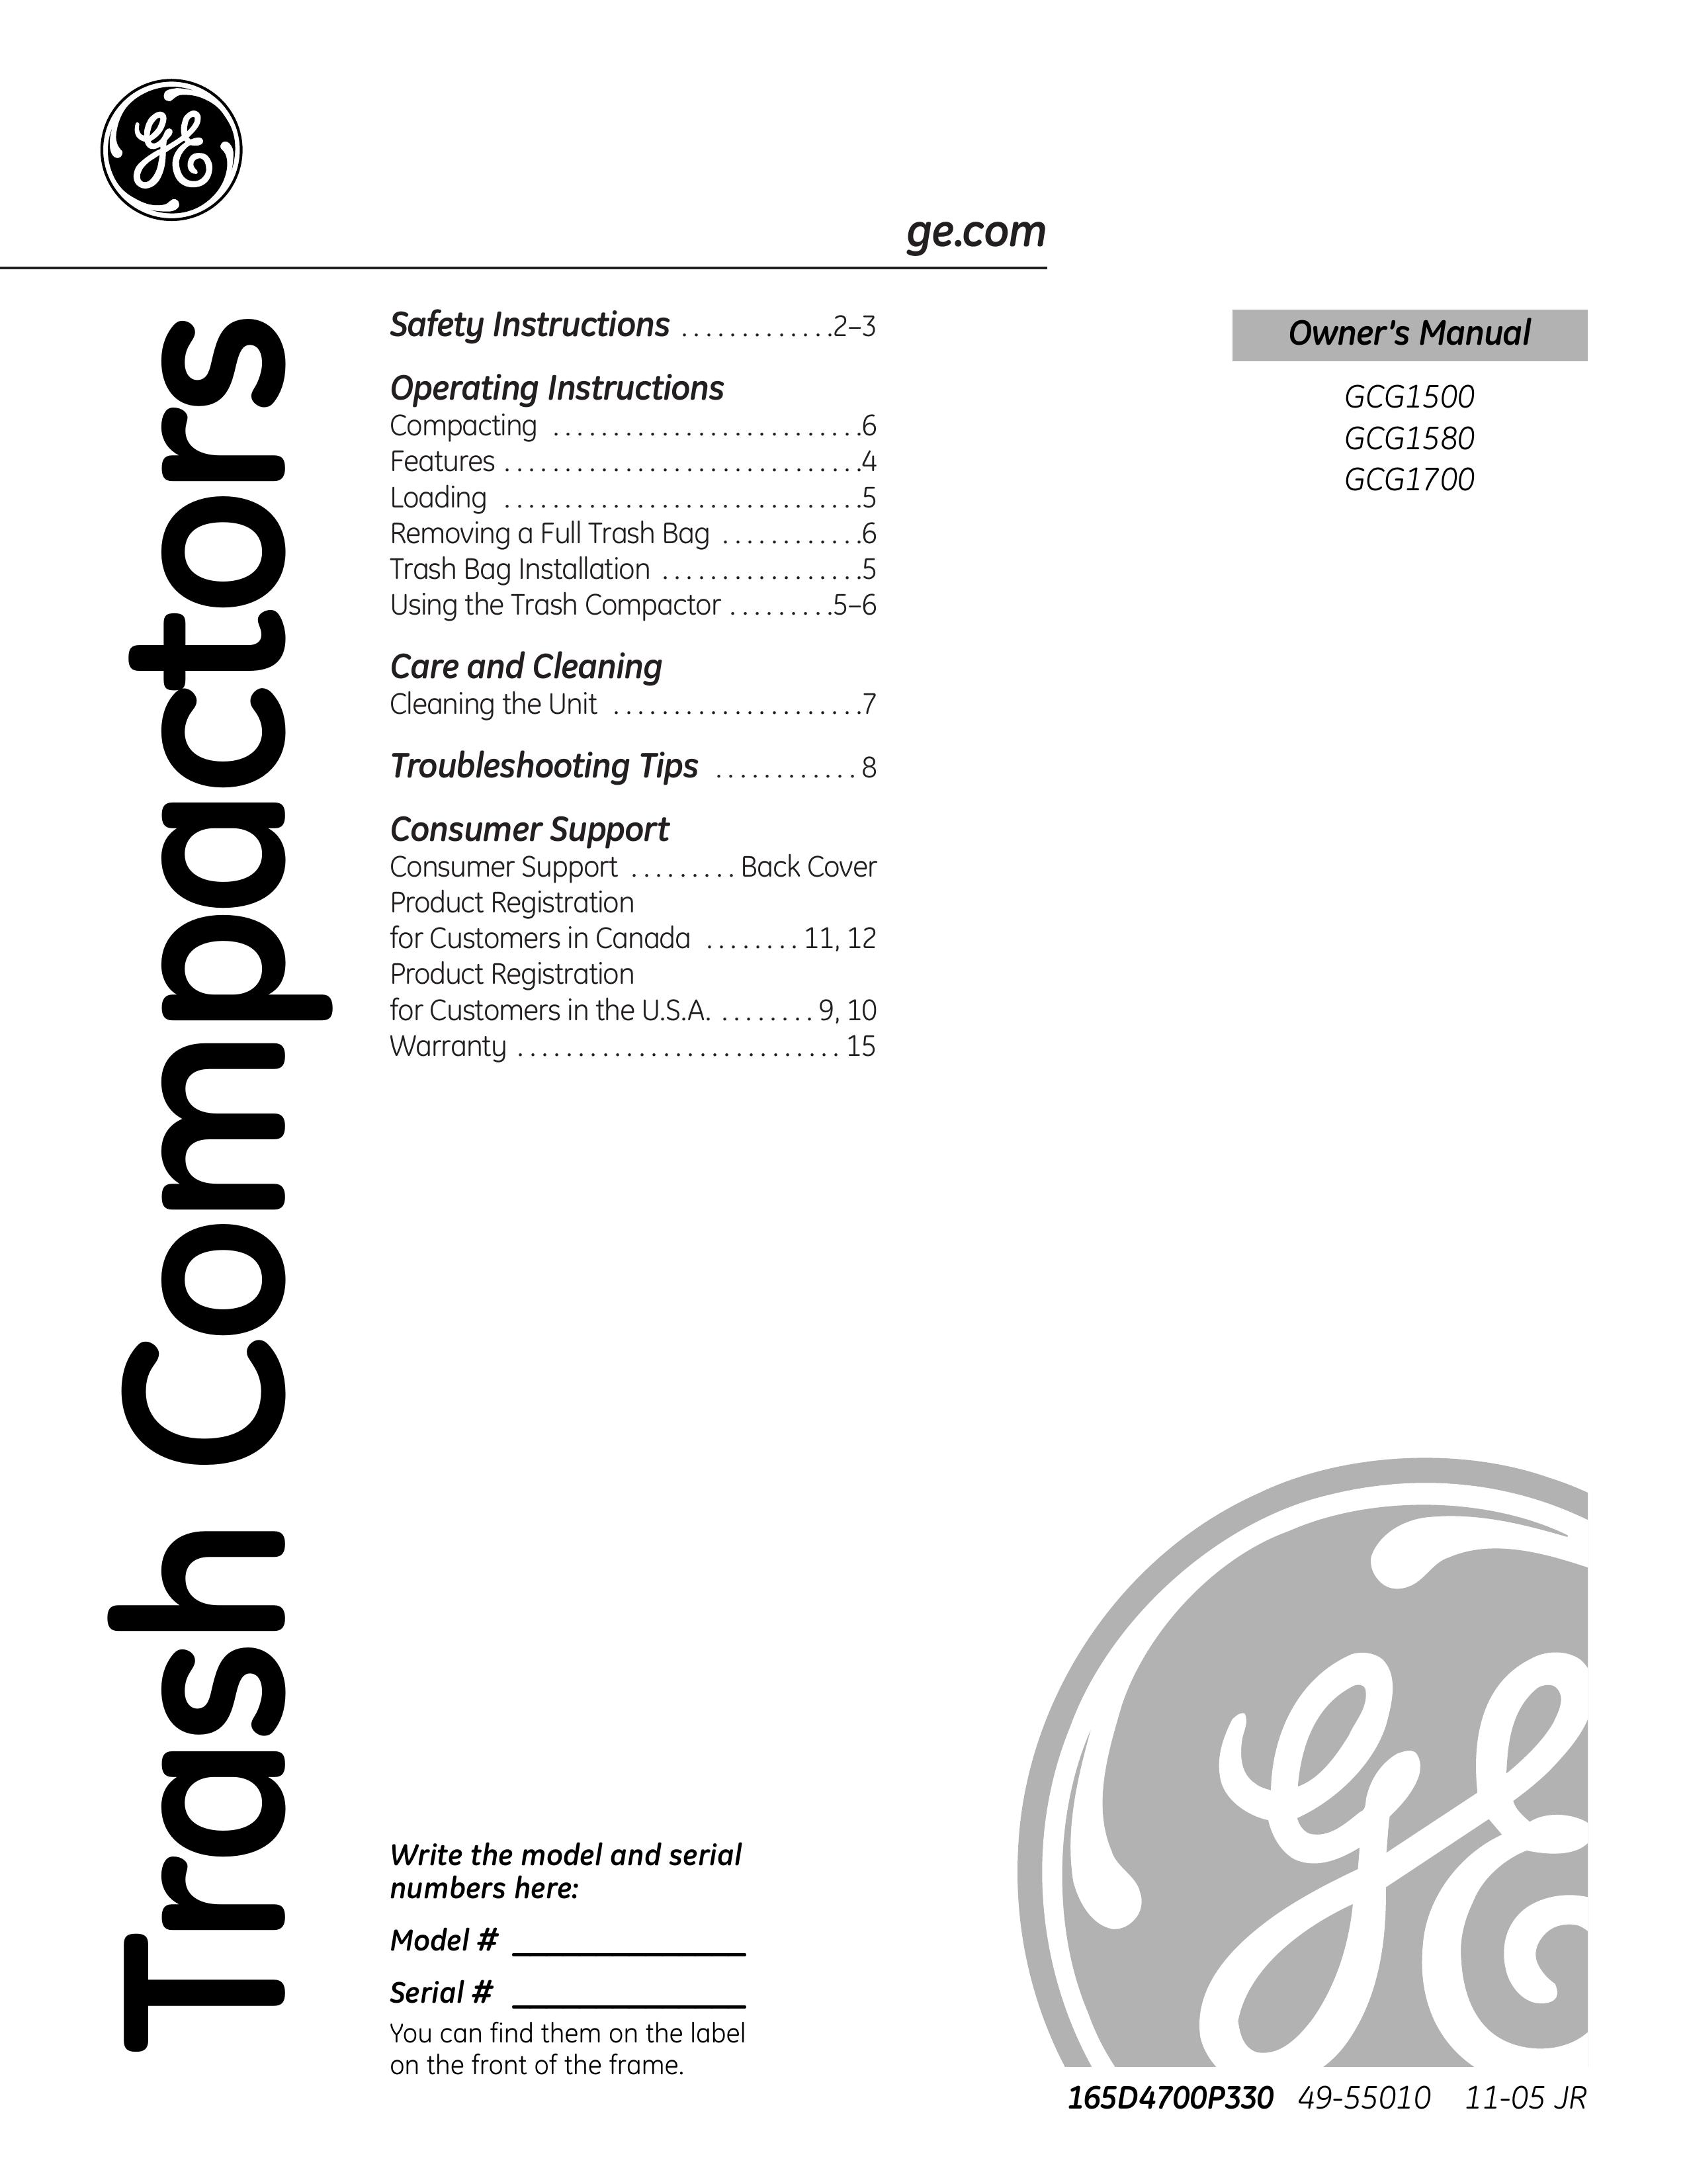 GE GCG1580 Trash Compactor User Manual